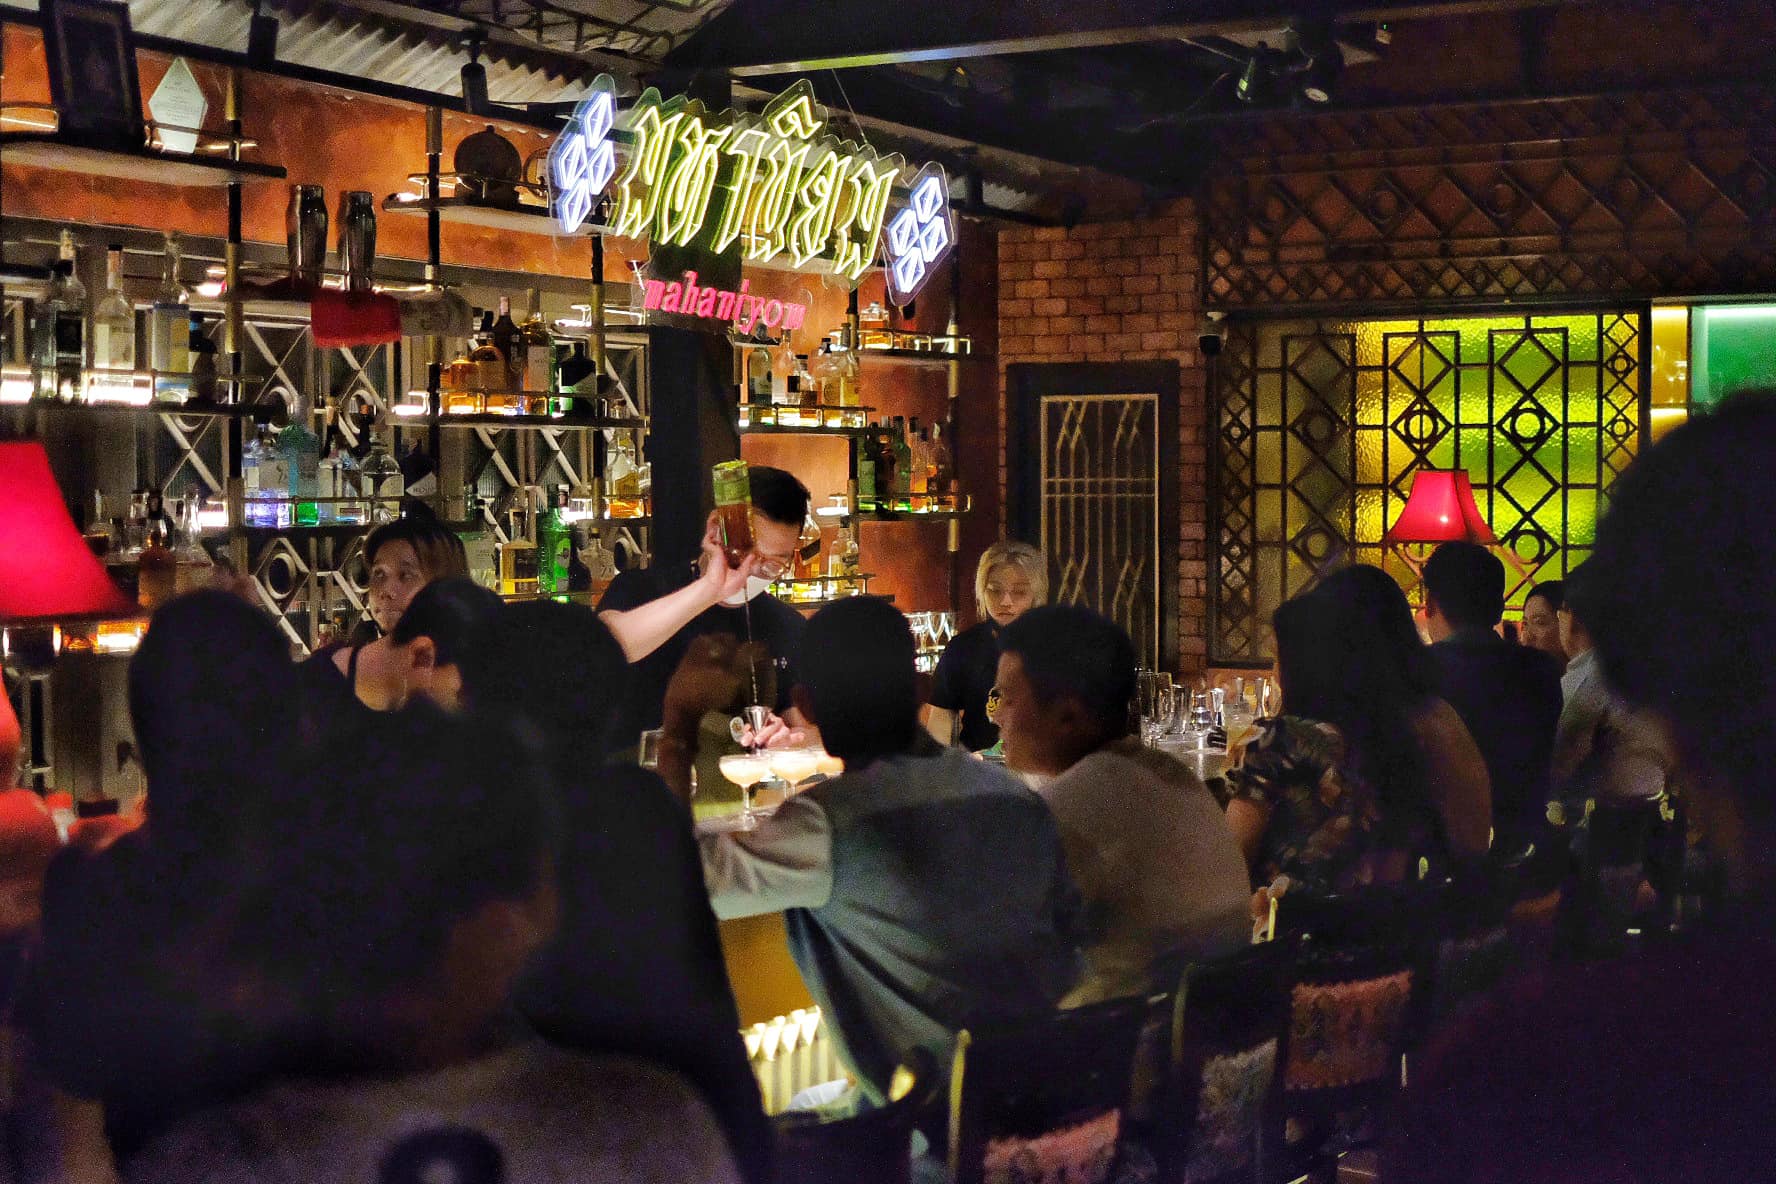 Mahaniyom Cocktail Bar (มหานิยมค็อกเทลบาร์) : Bangkok (กรุงเทพมหานคร)